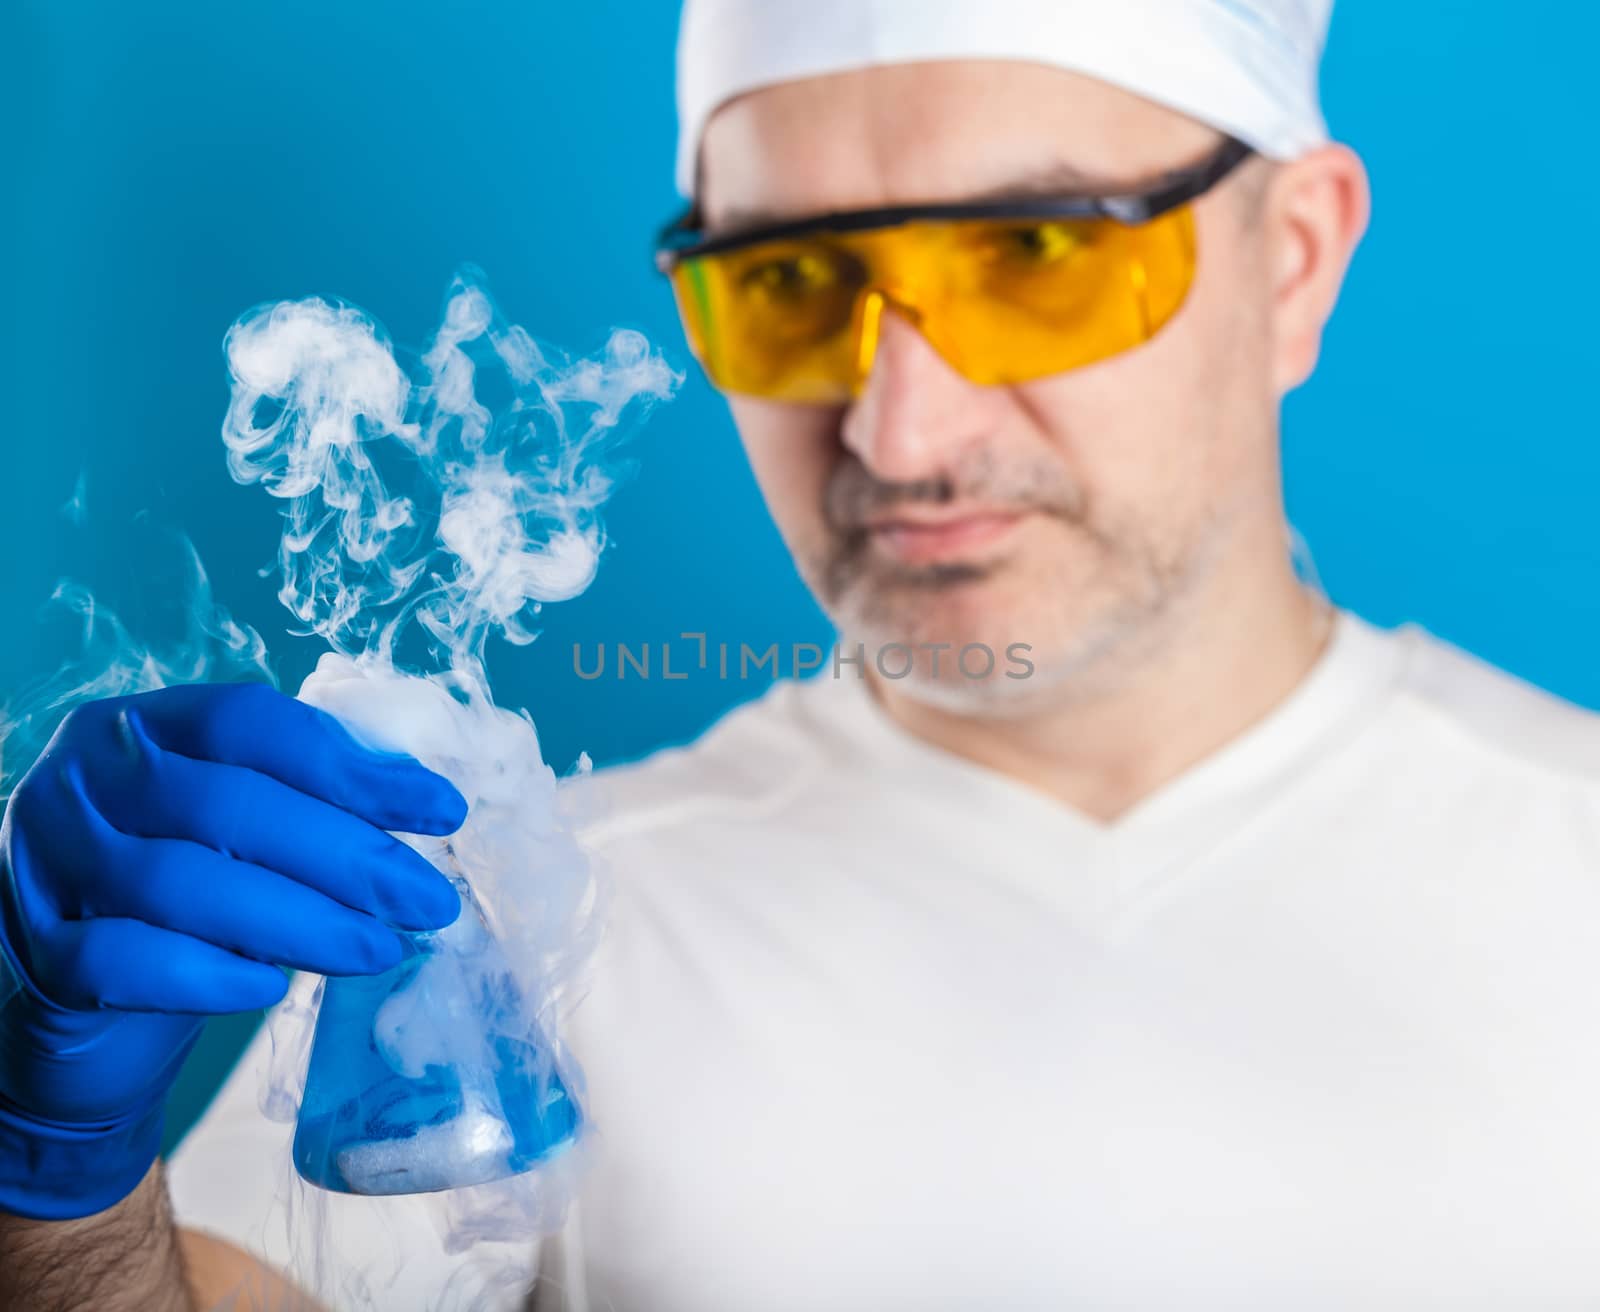 man chemist examines test tube on a blue background